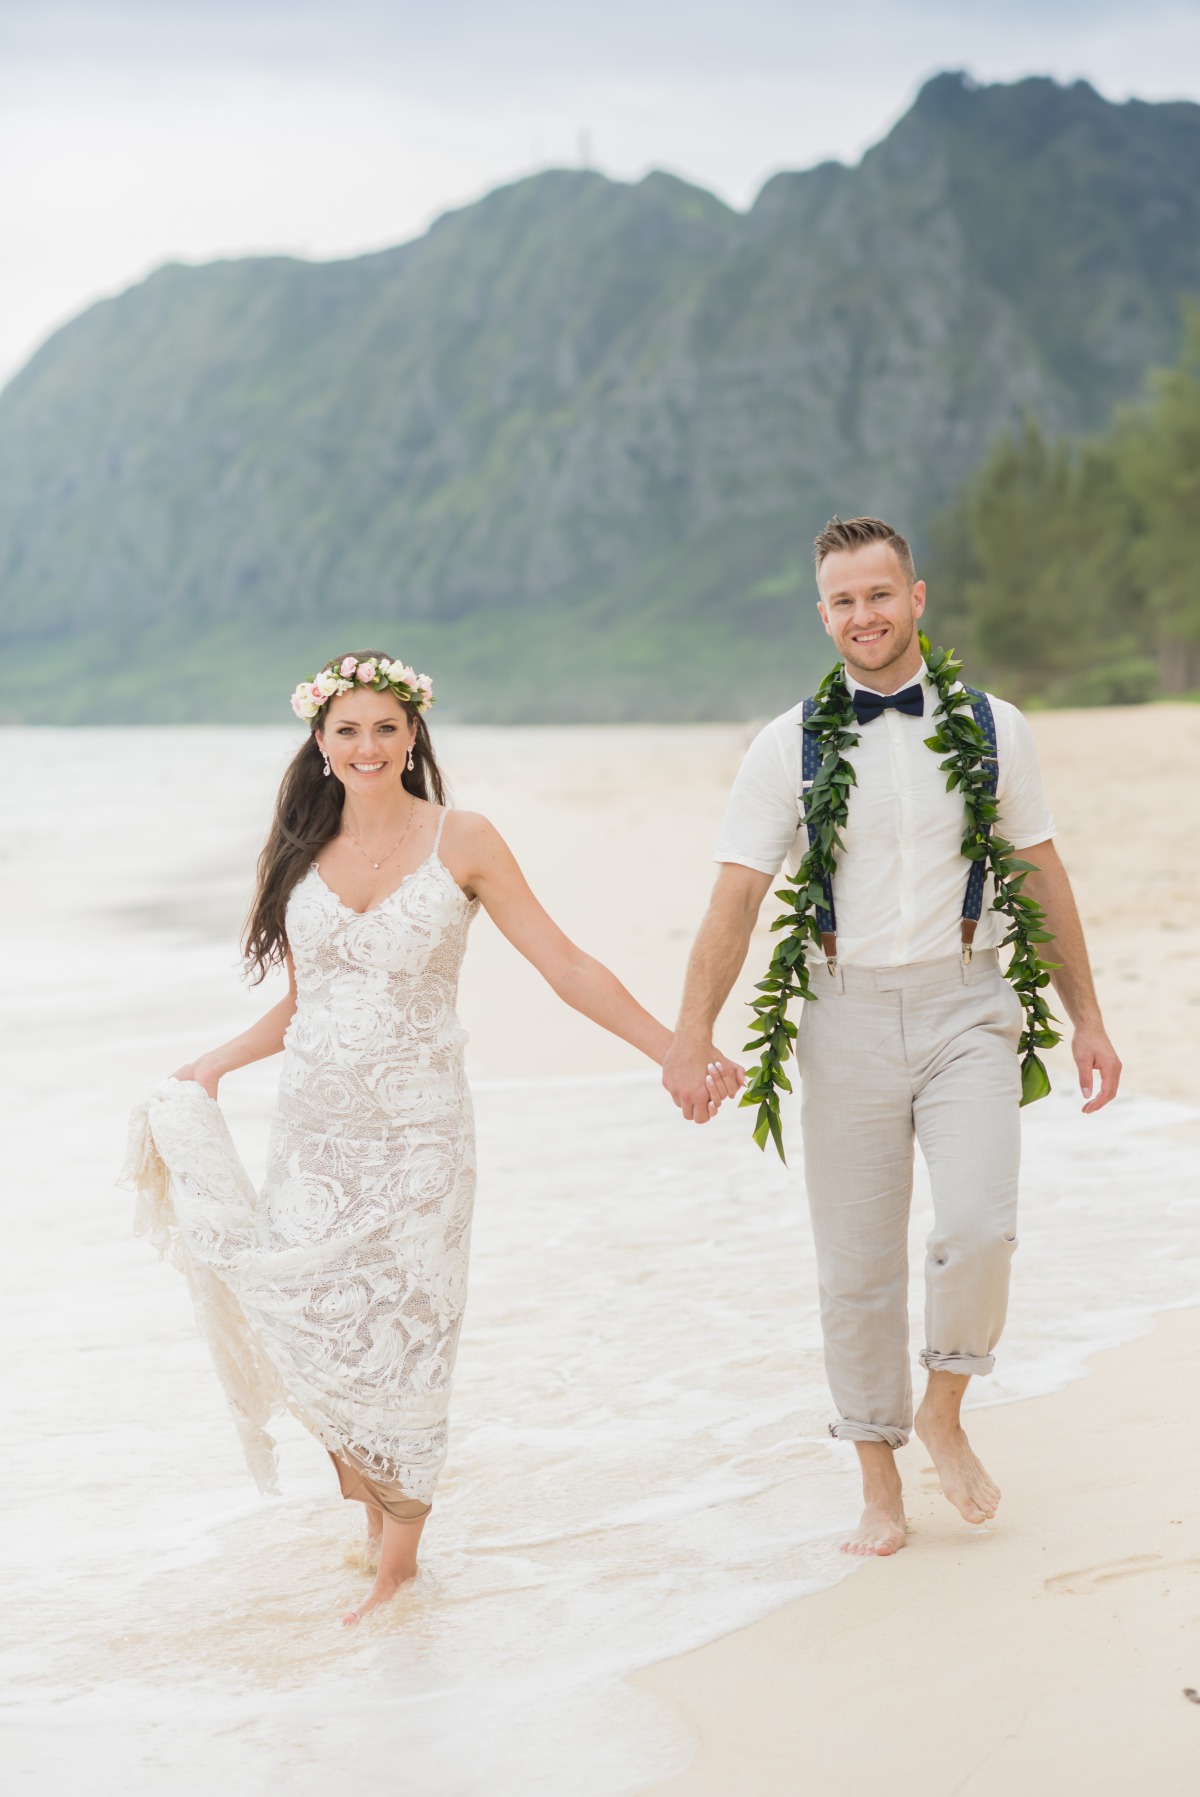 Get married on the beach in Oahu